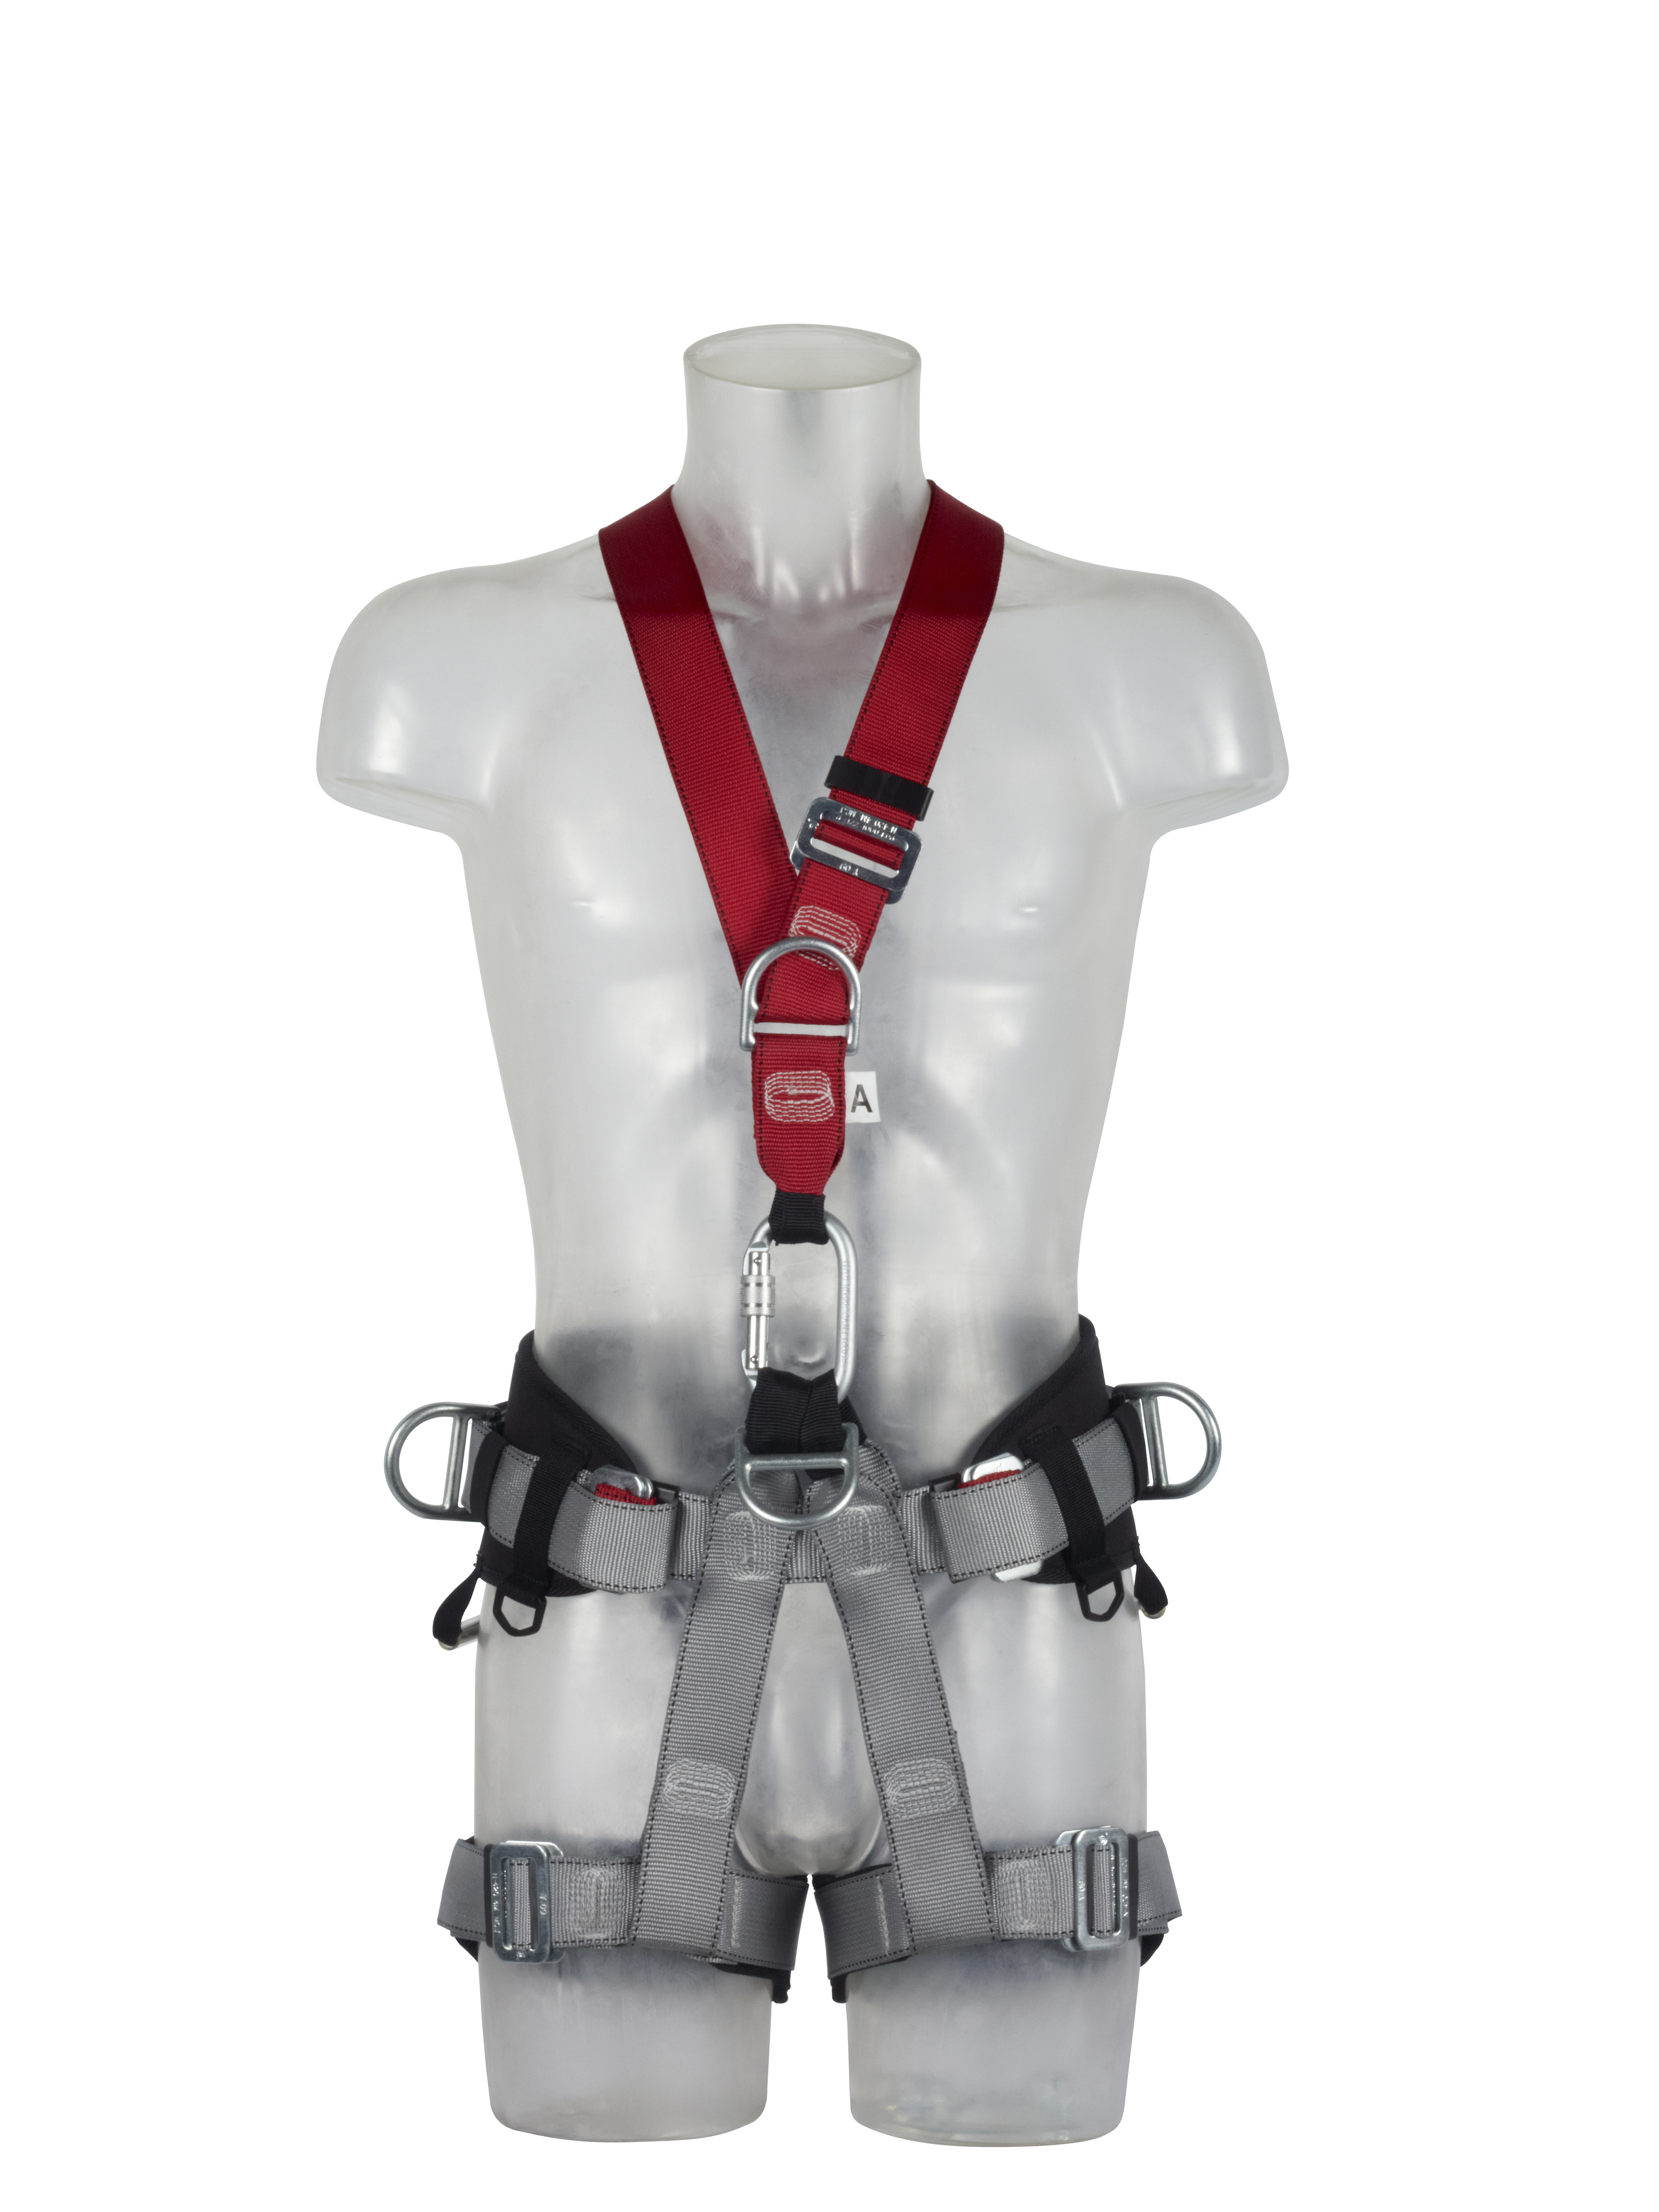 Protecta Pro Suspension Harness (AB35132 / AB35133 / AB35134